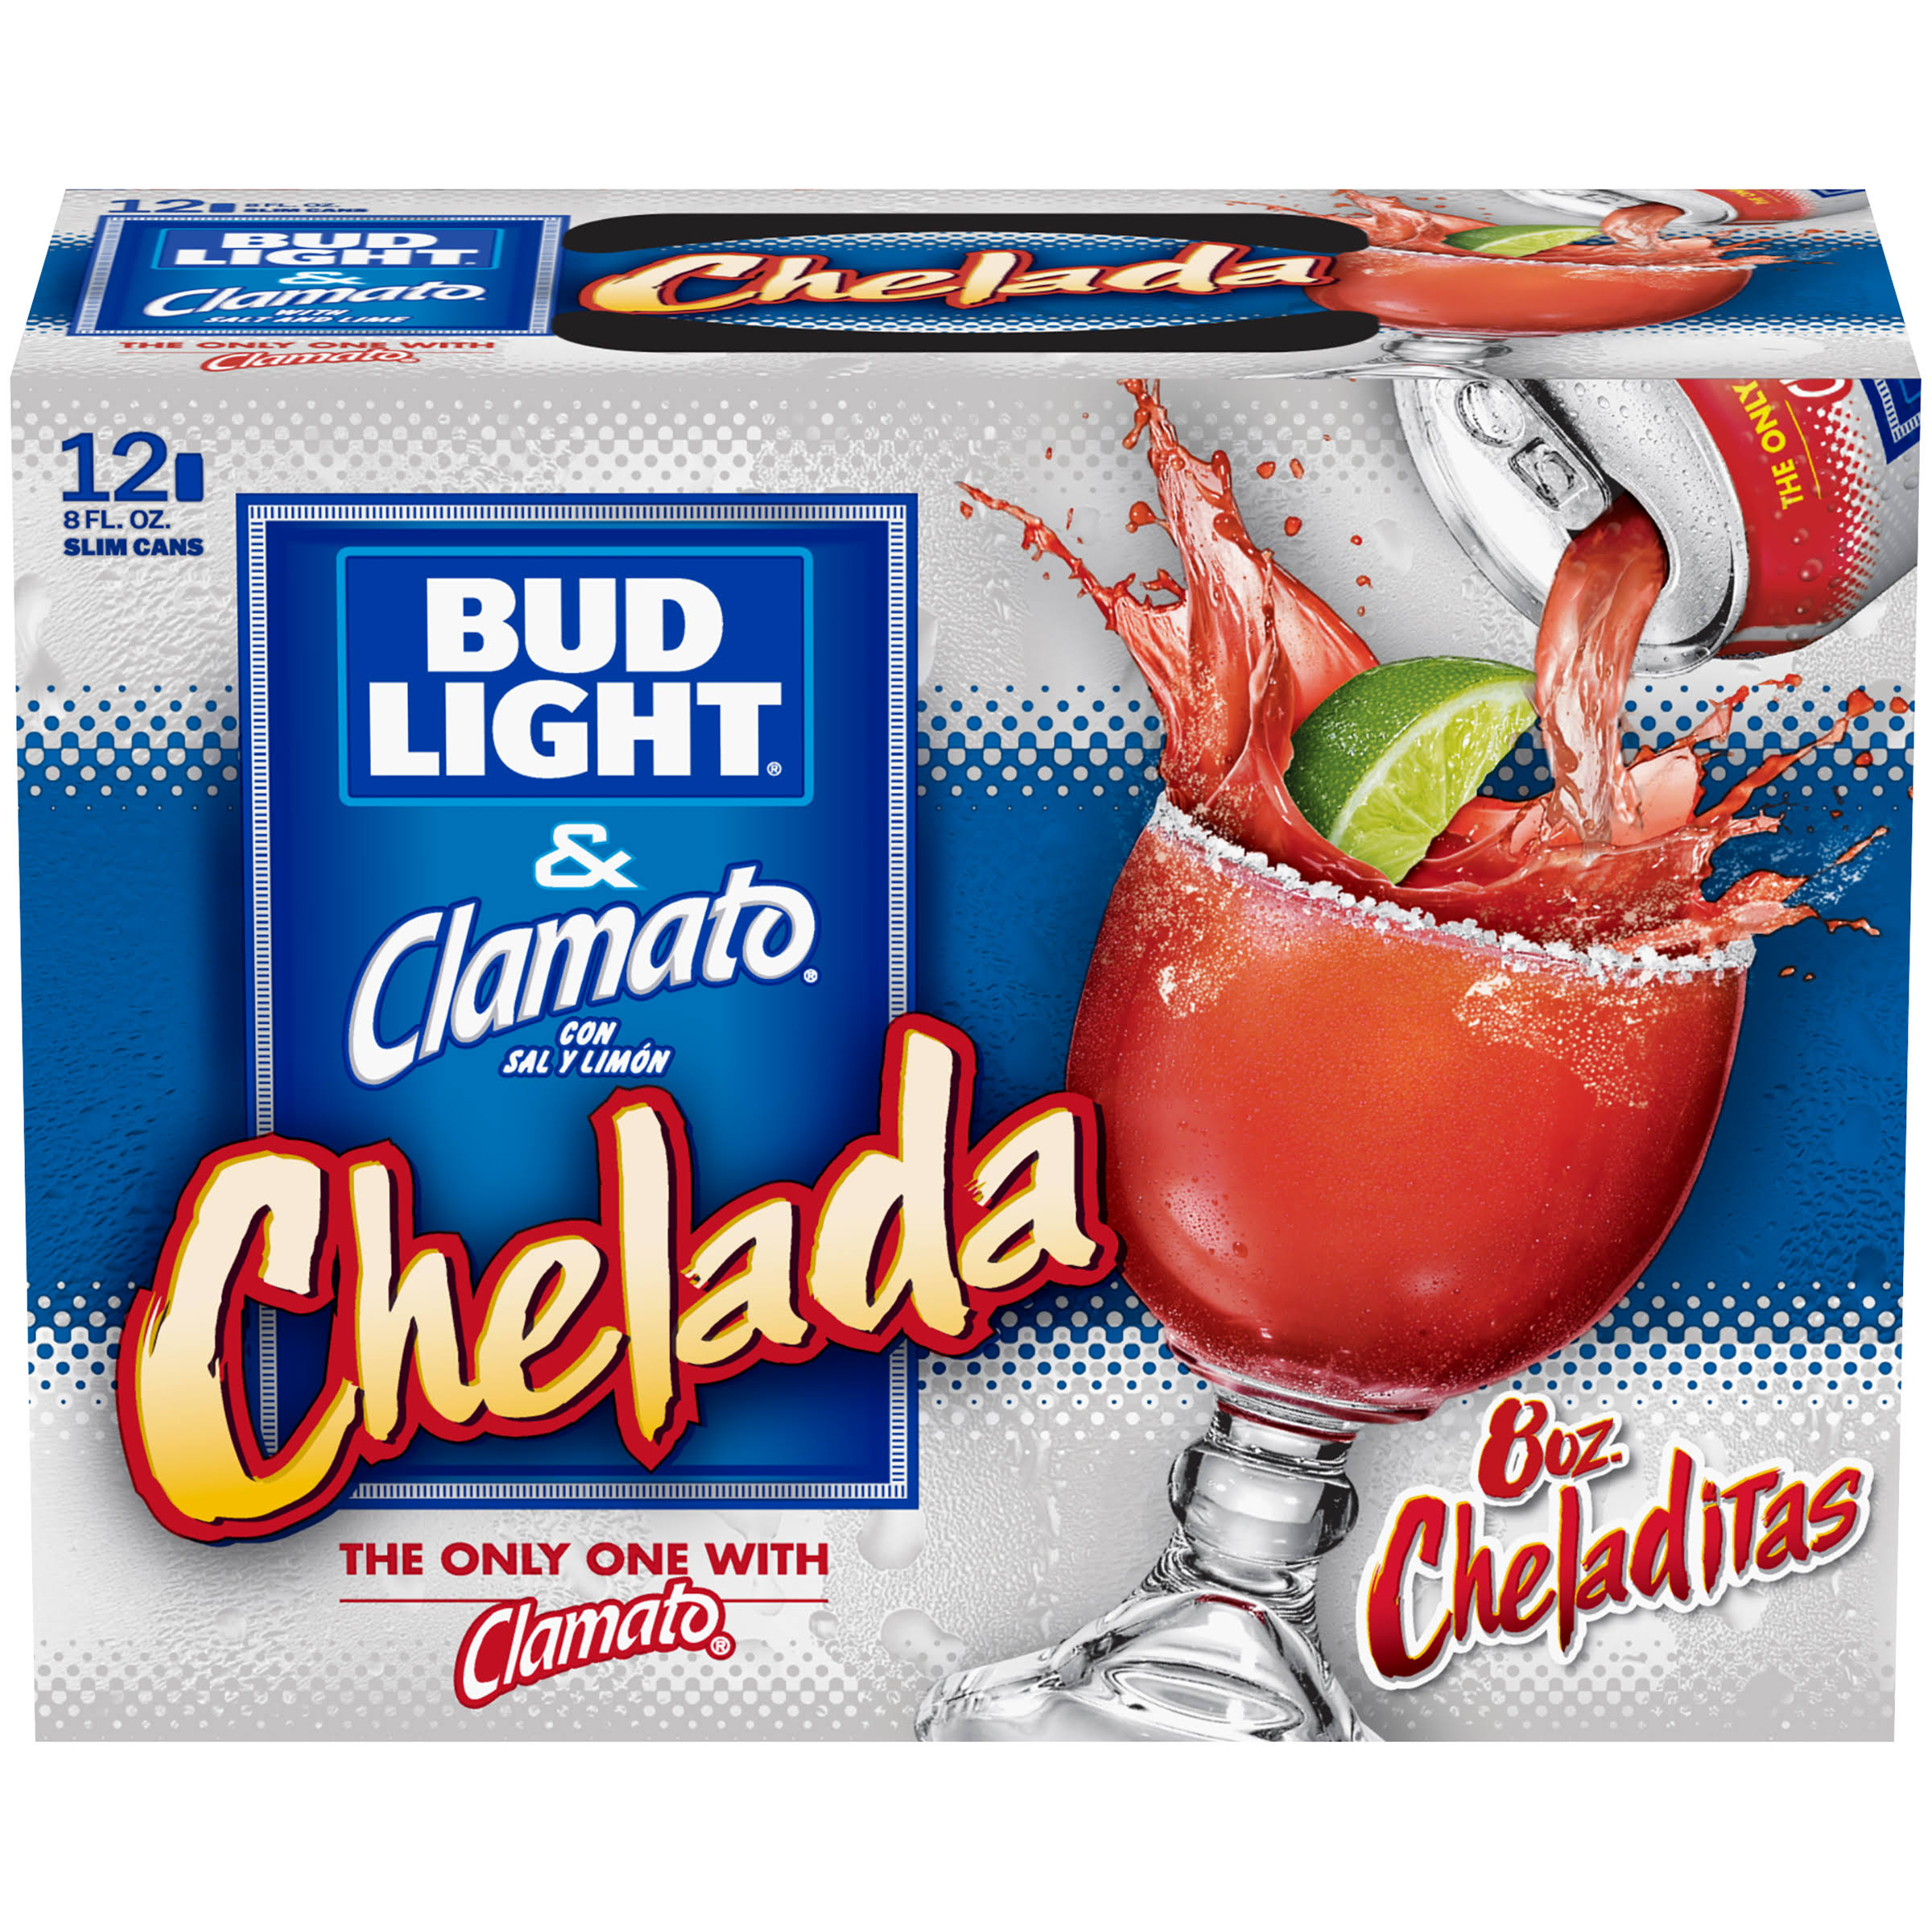 Bud Light & Clamato Chelada Beer - 12 x 8oz Pack